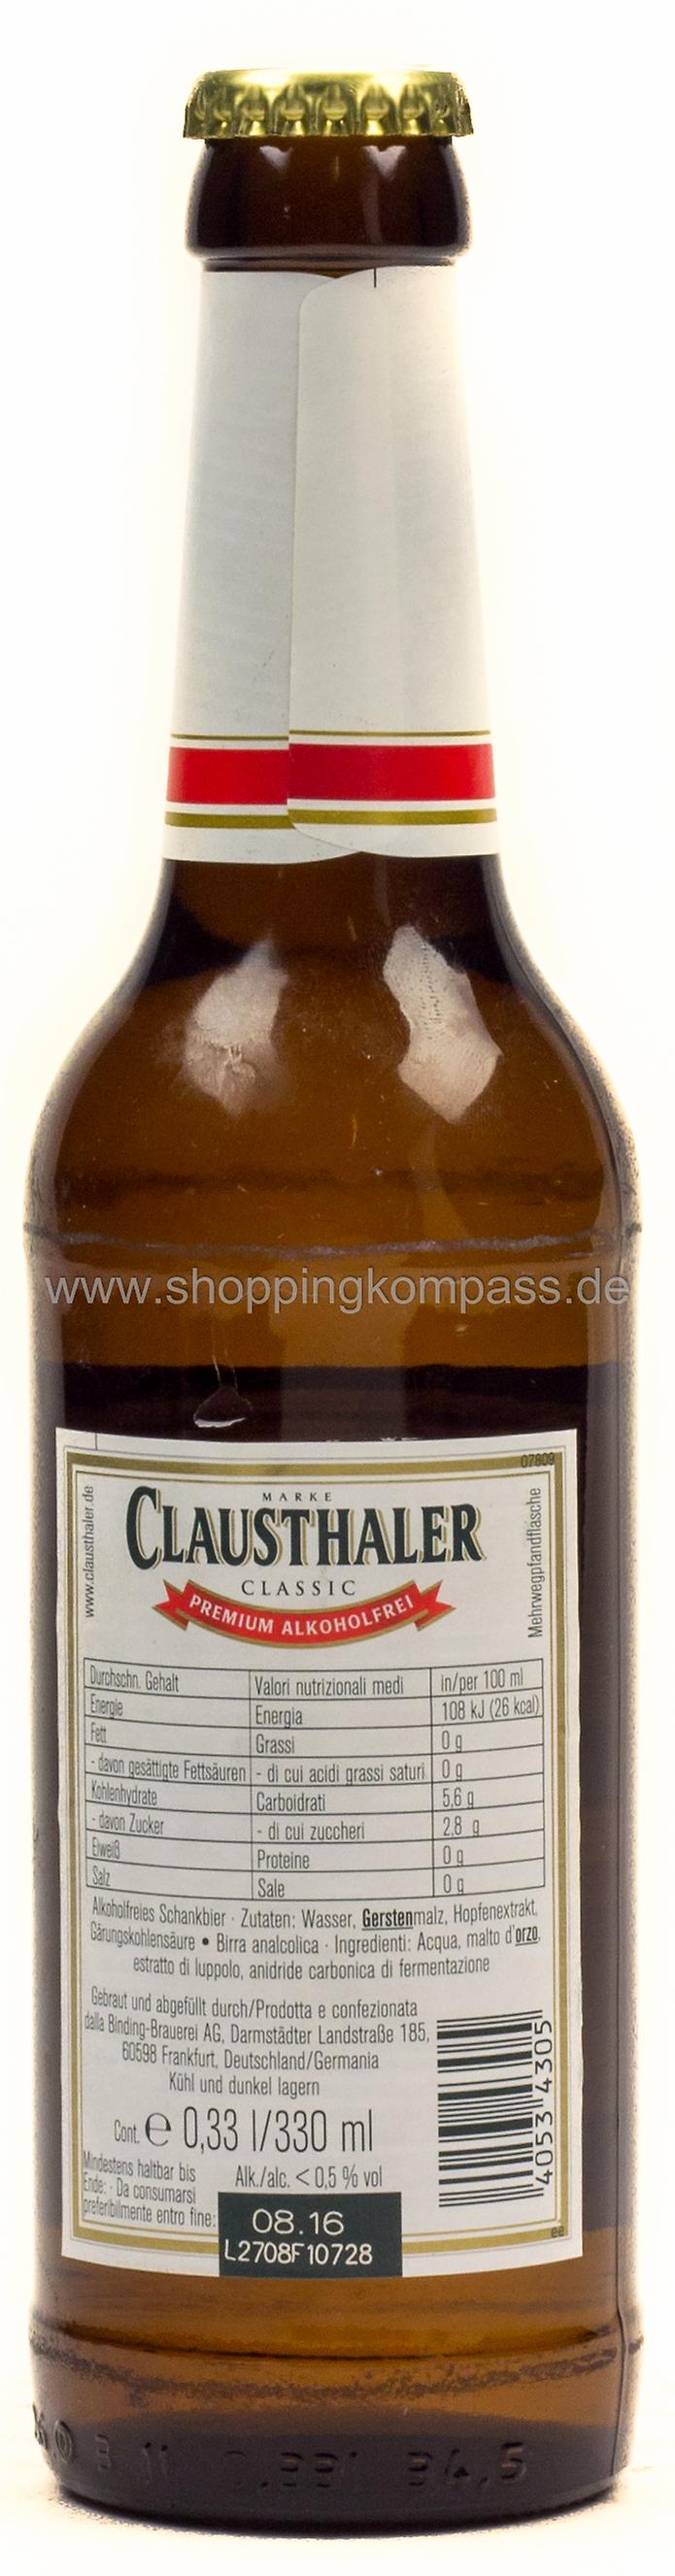 Clausthaler Classic alkoholfrei Kasten 4 x 6 x 0,33 l Glas Mehrweg